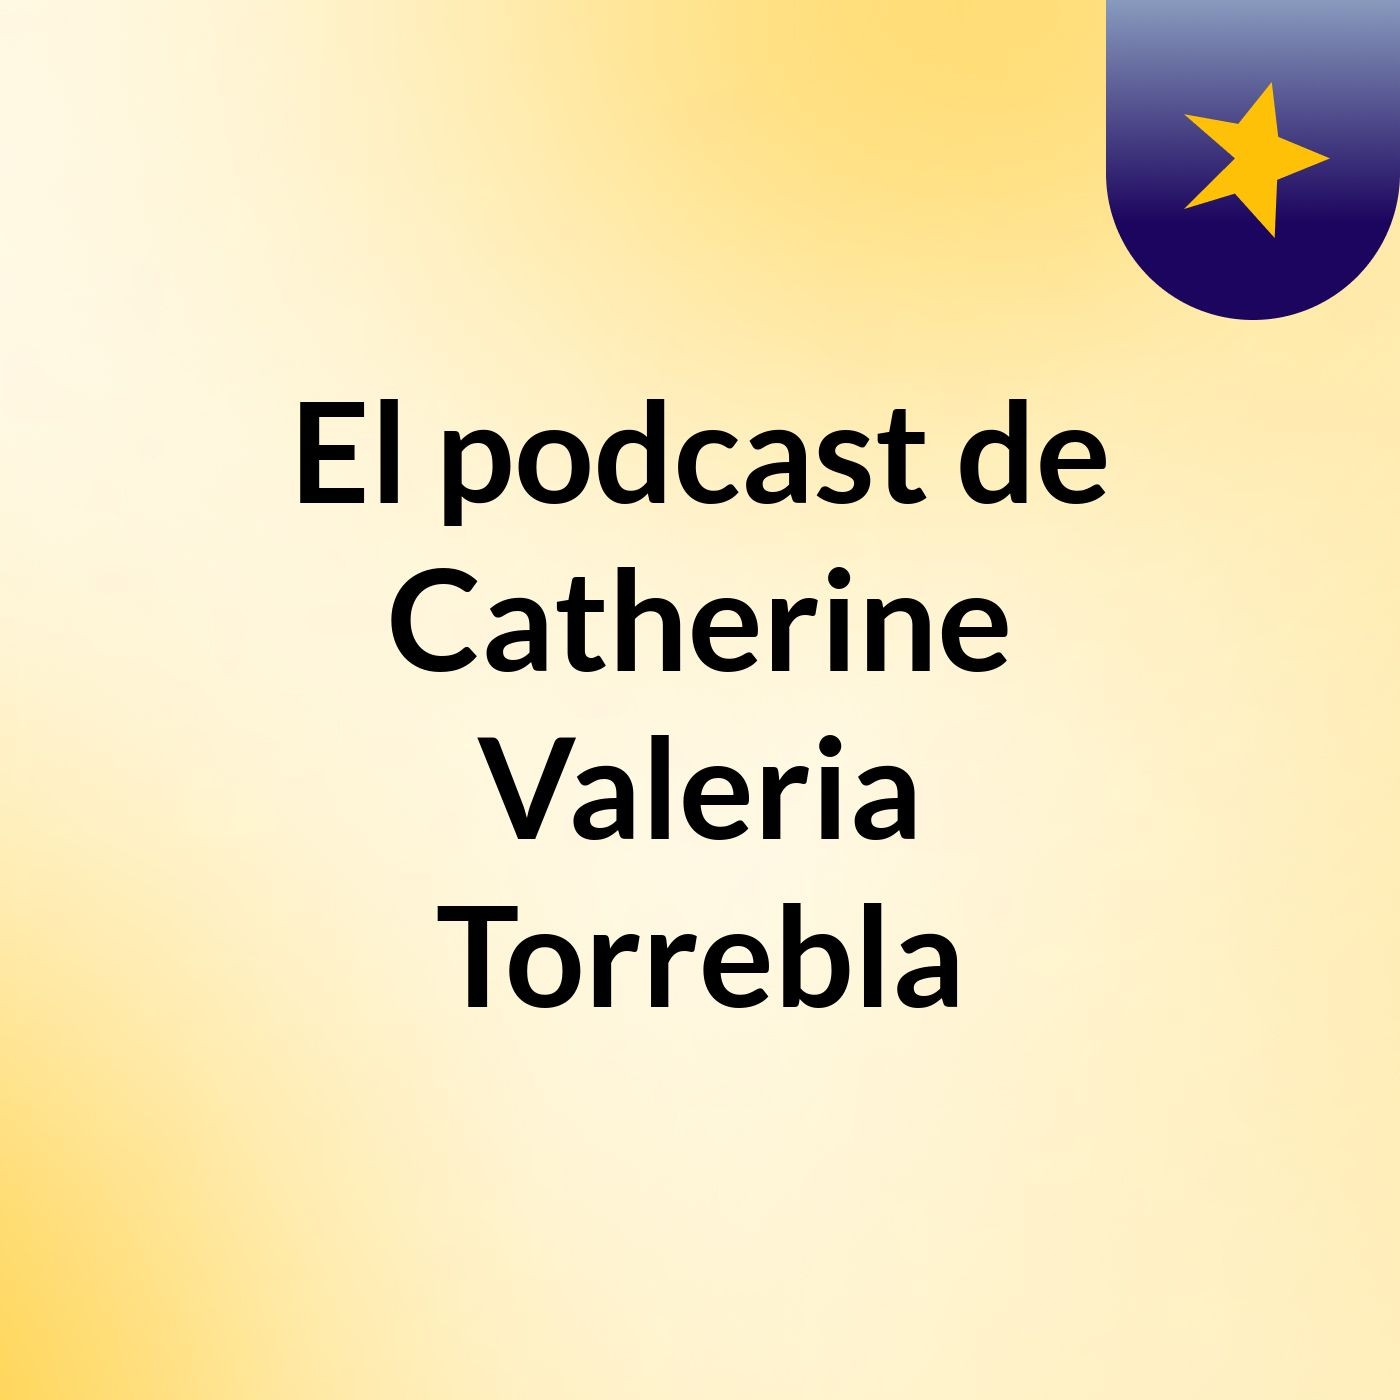 El podcast de Catherine Valeria Torrebla